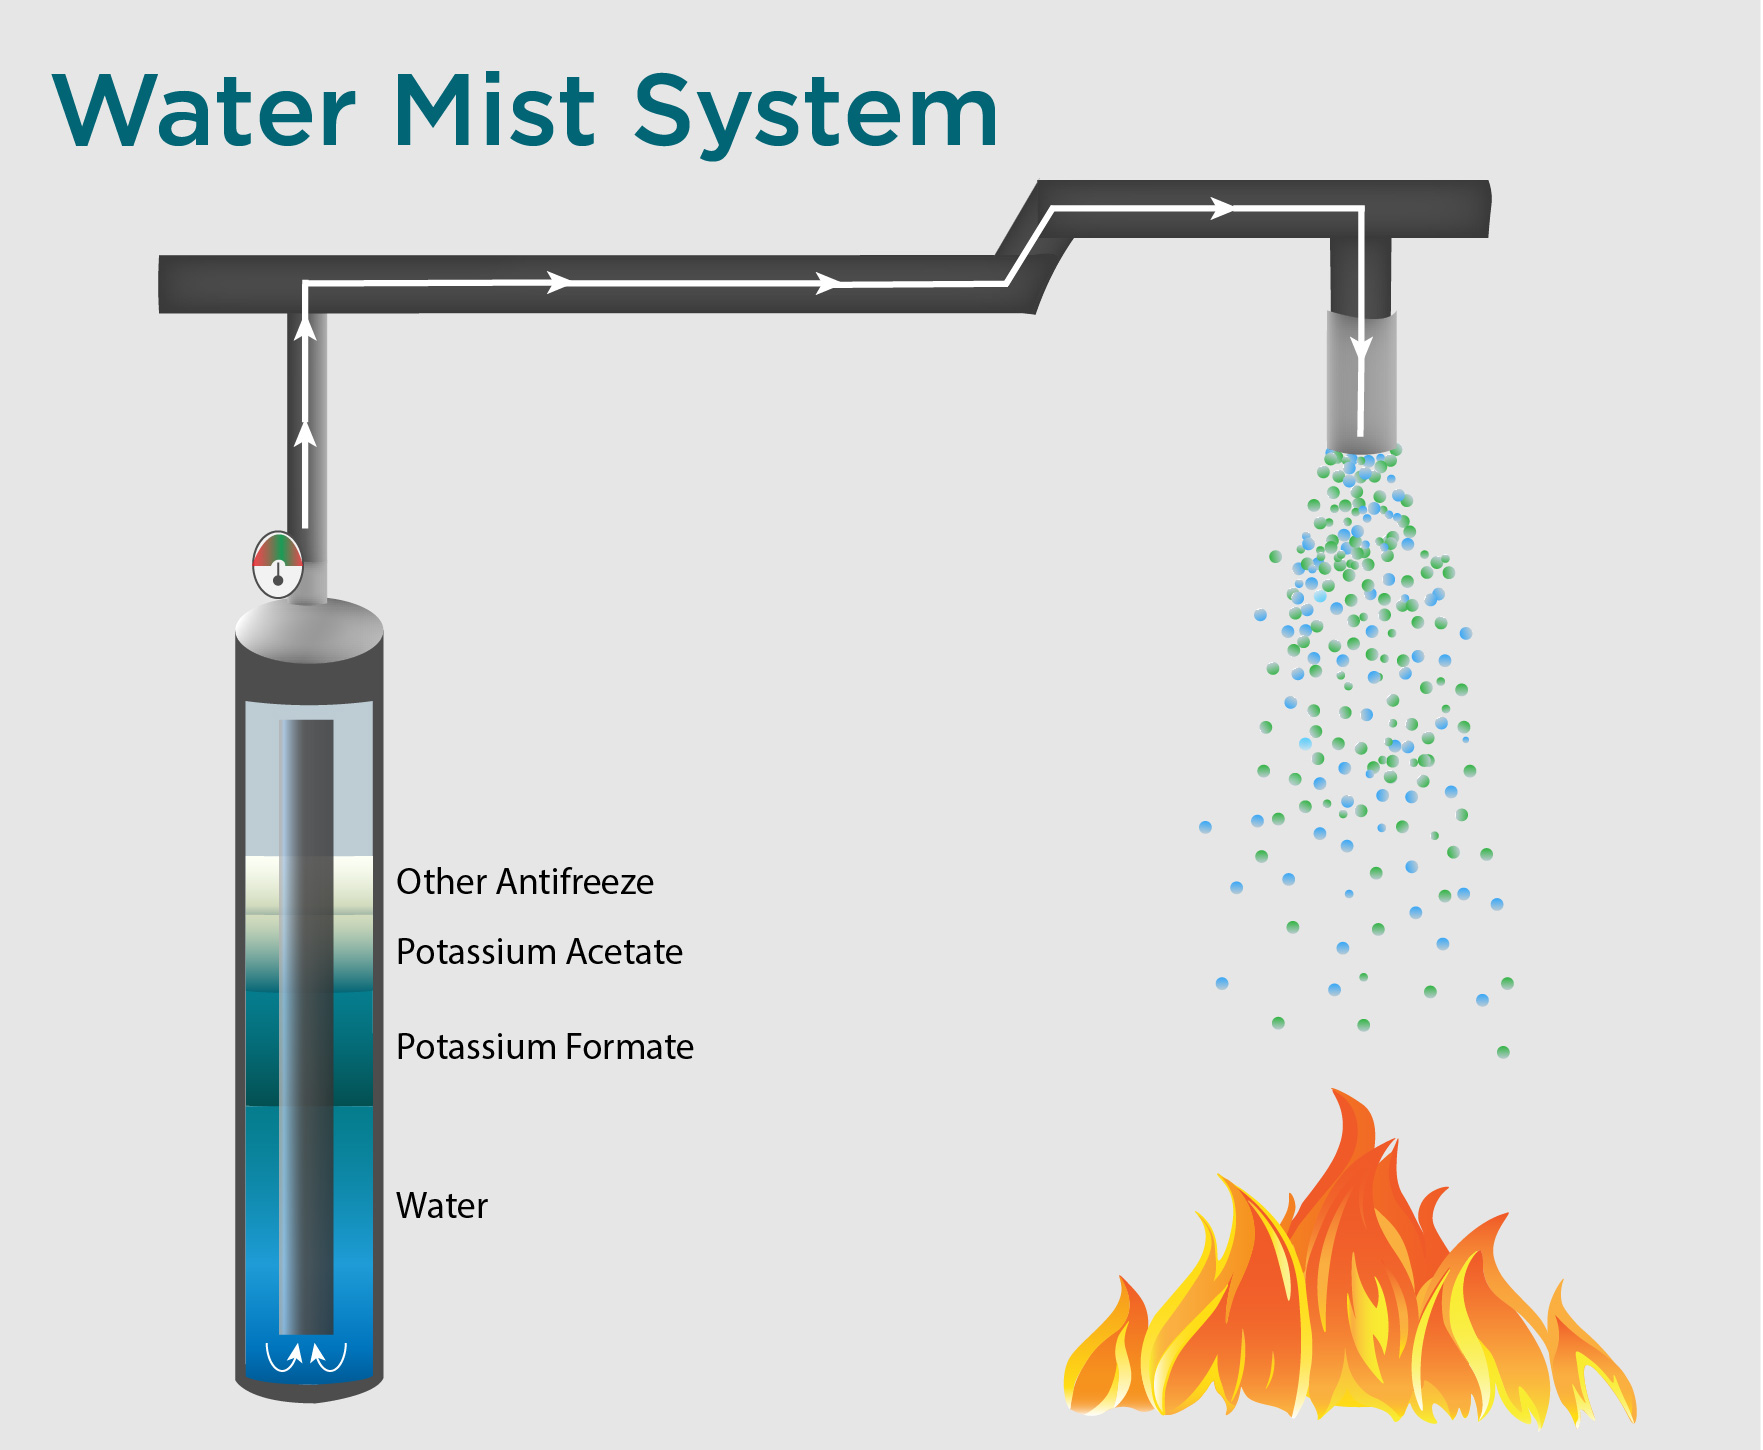 Water mist system